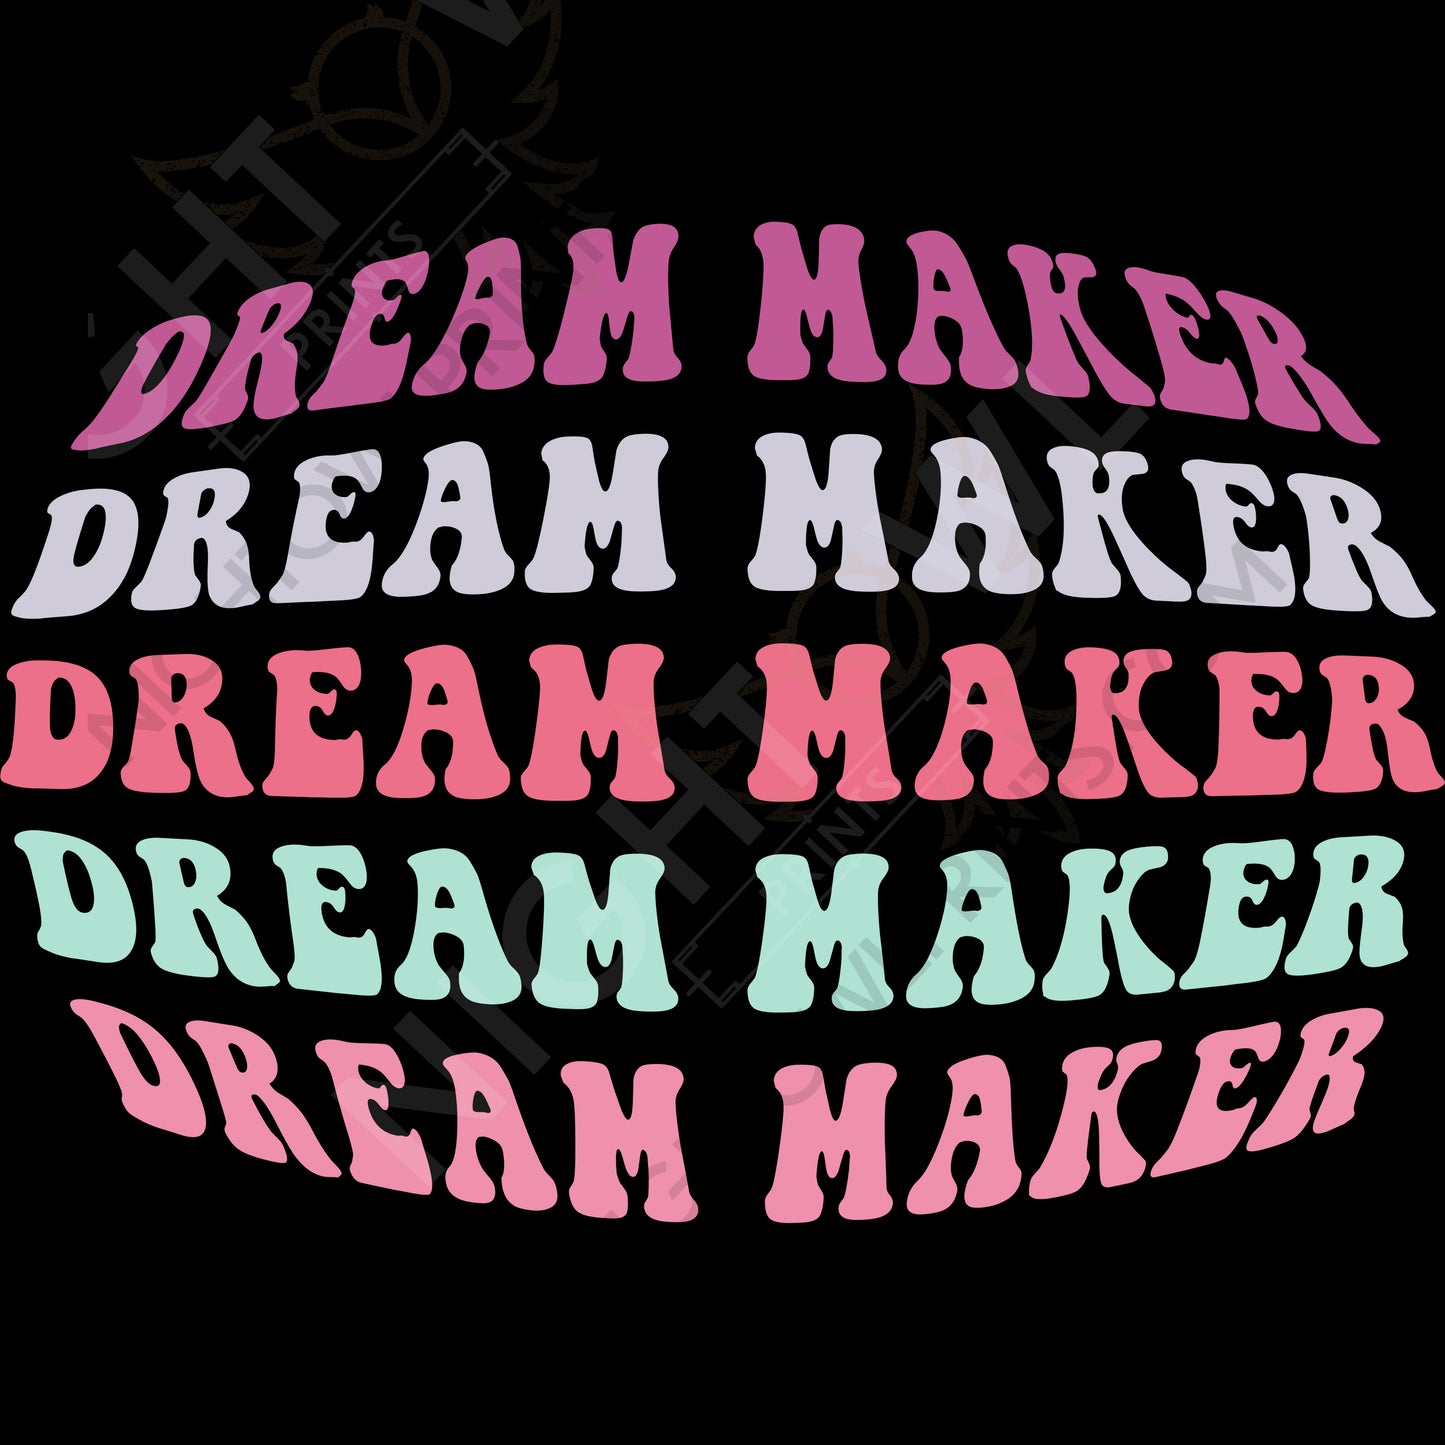 Download file PNG. Dream Maker hippie font. 300 DPI.  Print ready file.